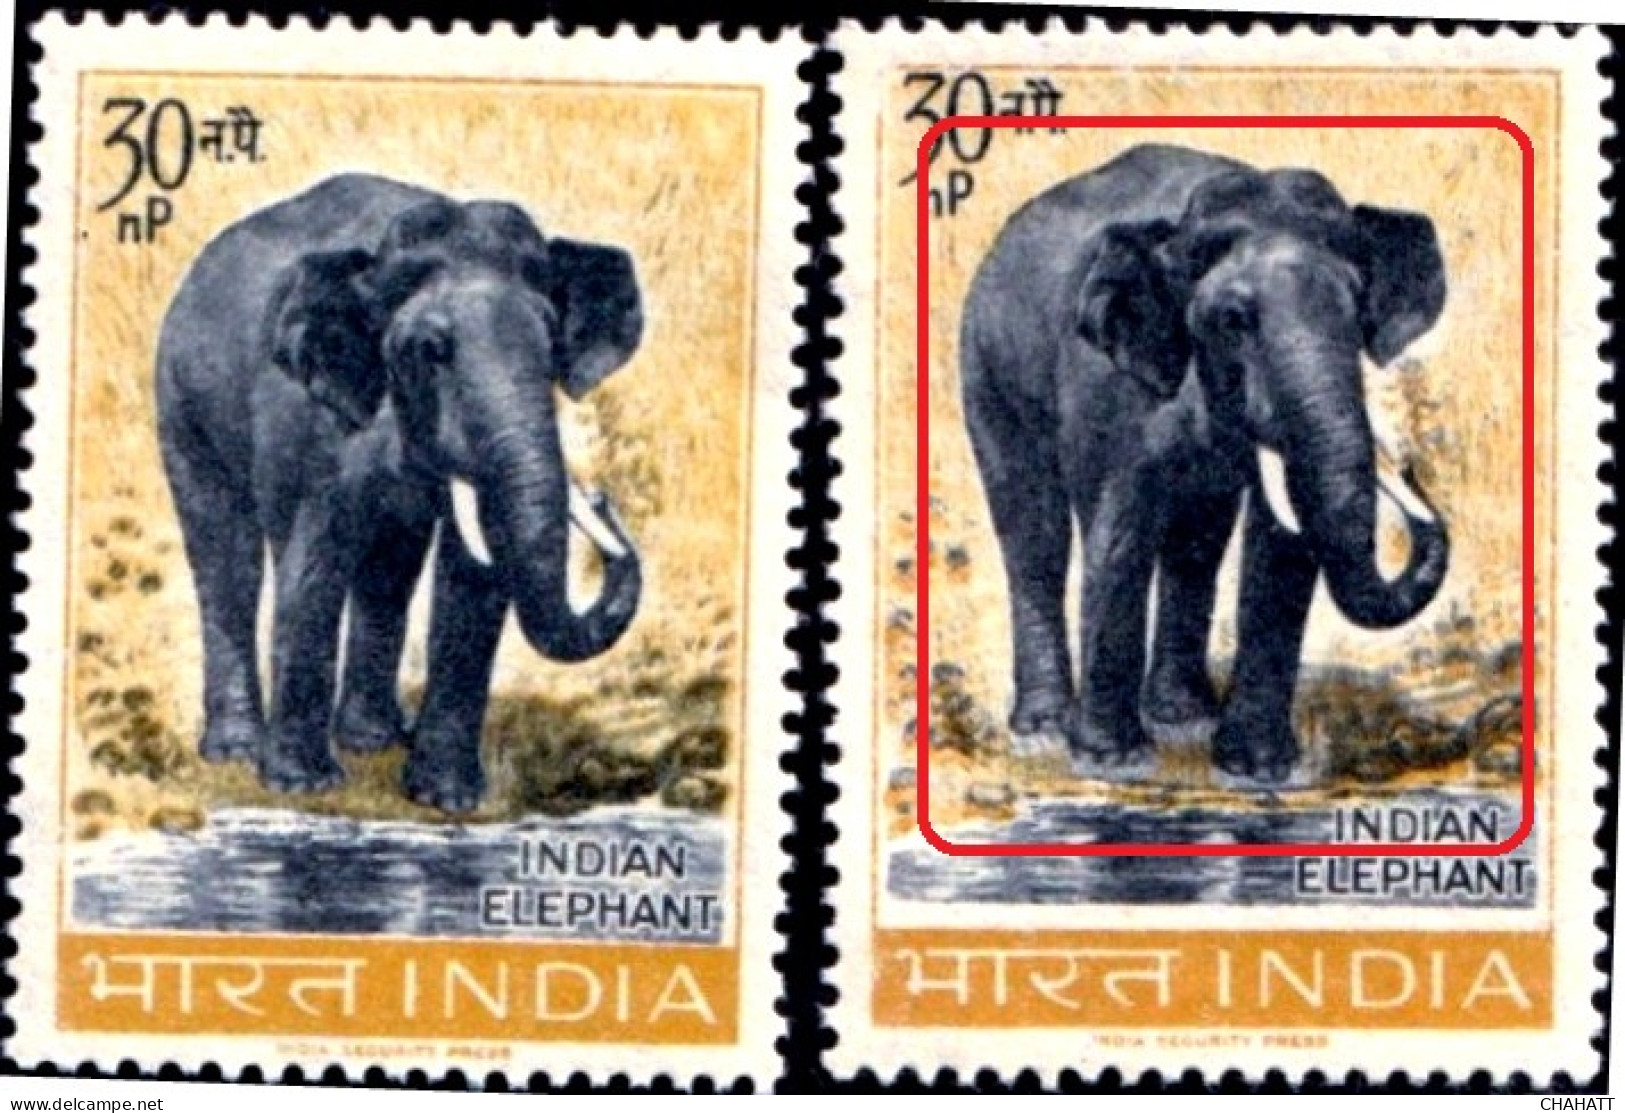 INDIAN ELEPHANT- 30np-WATERMARKED- INDIA 1963- COLOR VARIETY -MNH-IE-92 - Abarten Und Kuriositäten